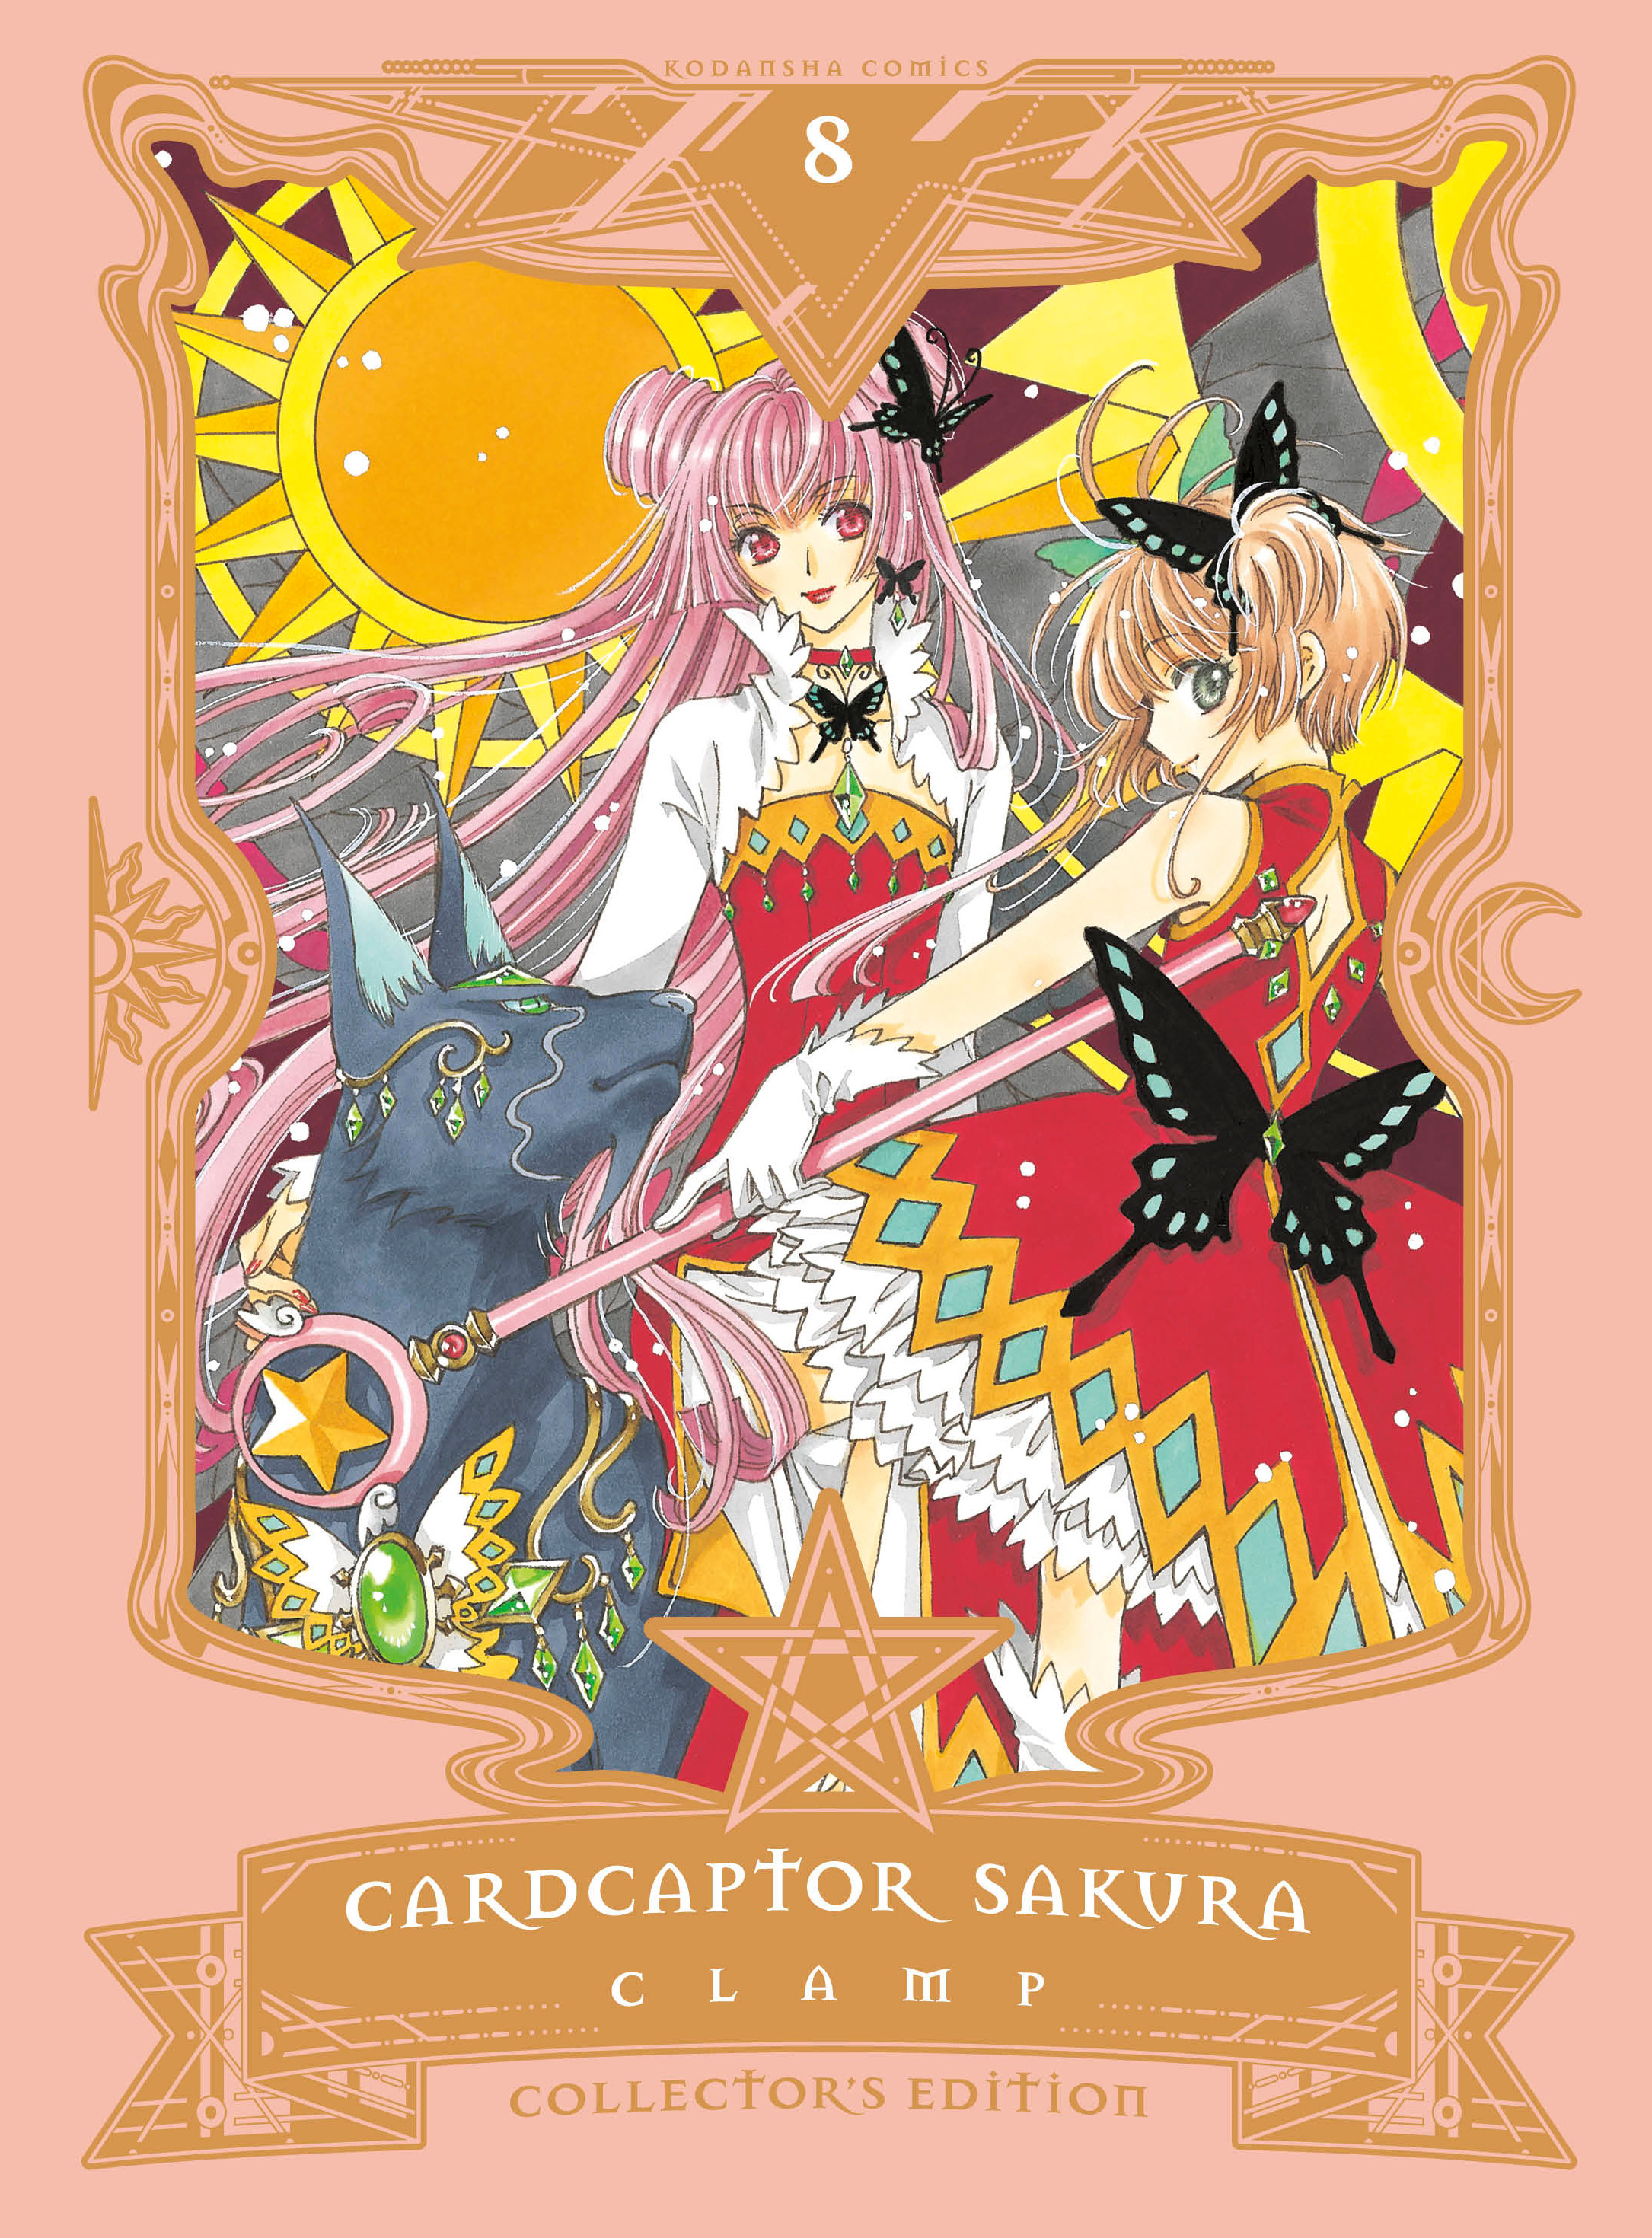 Cardcaptor Sakura Collected Edition Hardcover Volume 8 (Of 9)